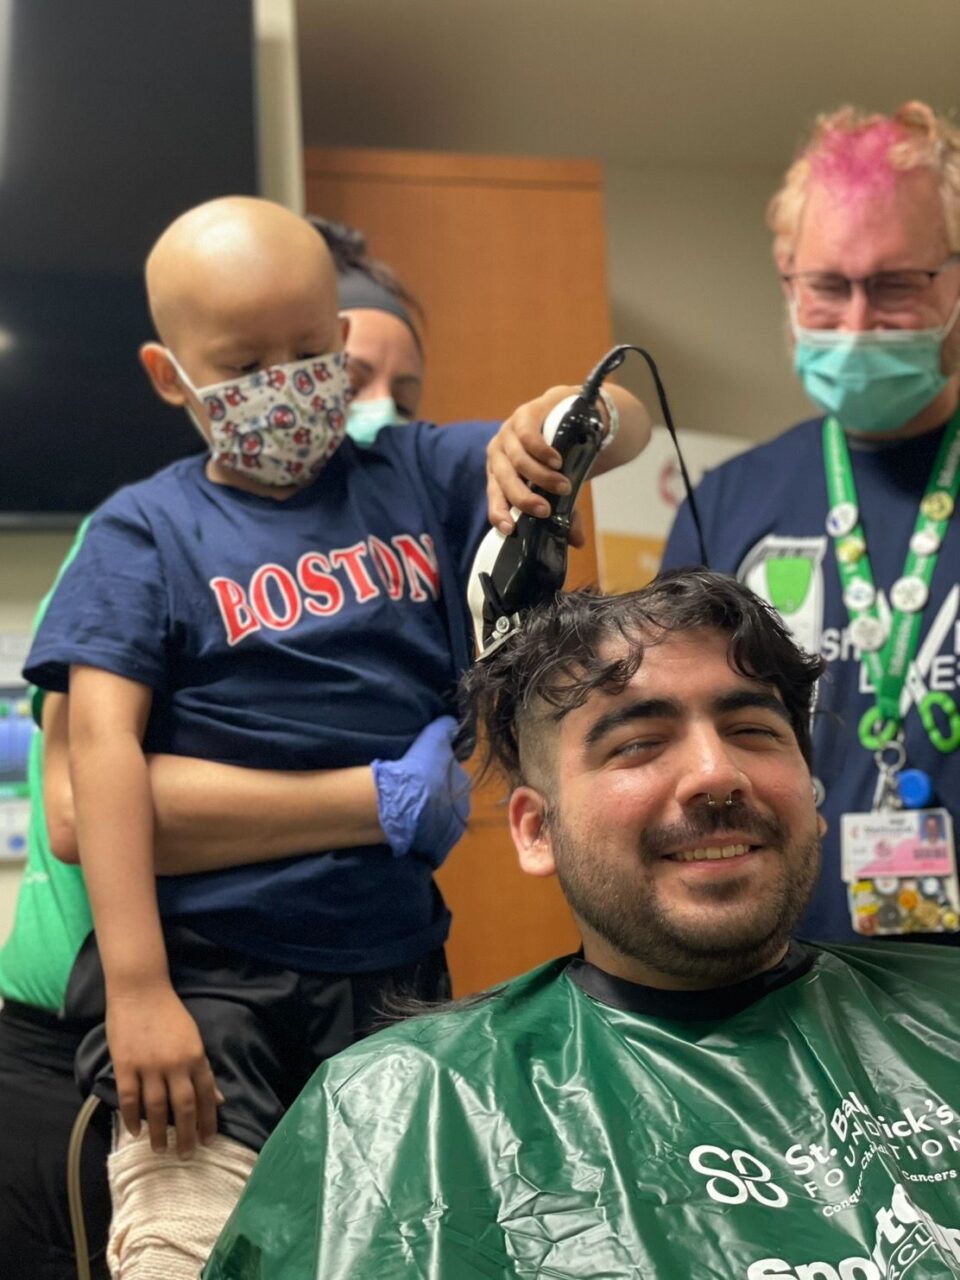 Methodist Children’s Hospital raised $131,000 from hair shaving fundraiser for childhood cancer research – Methodist Healthcare System